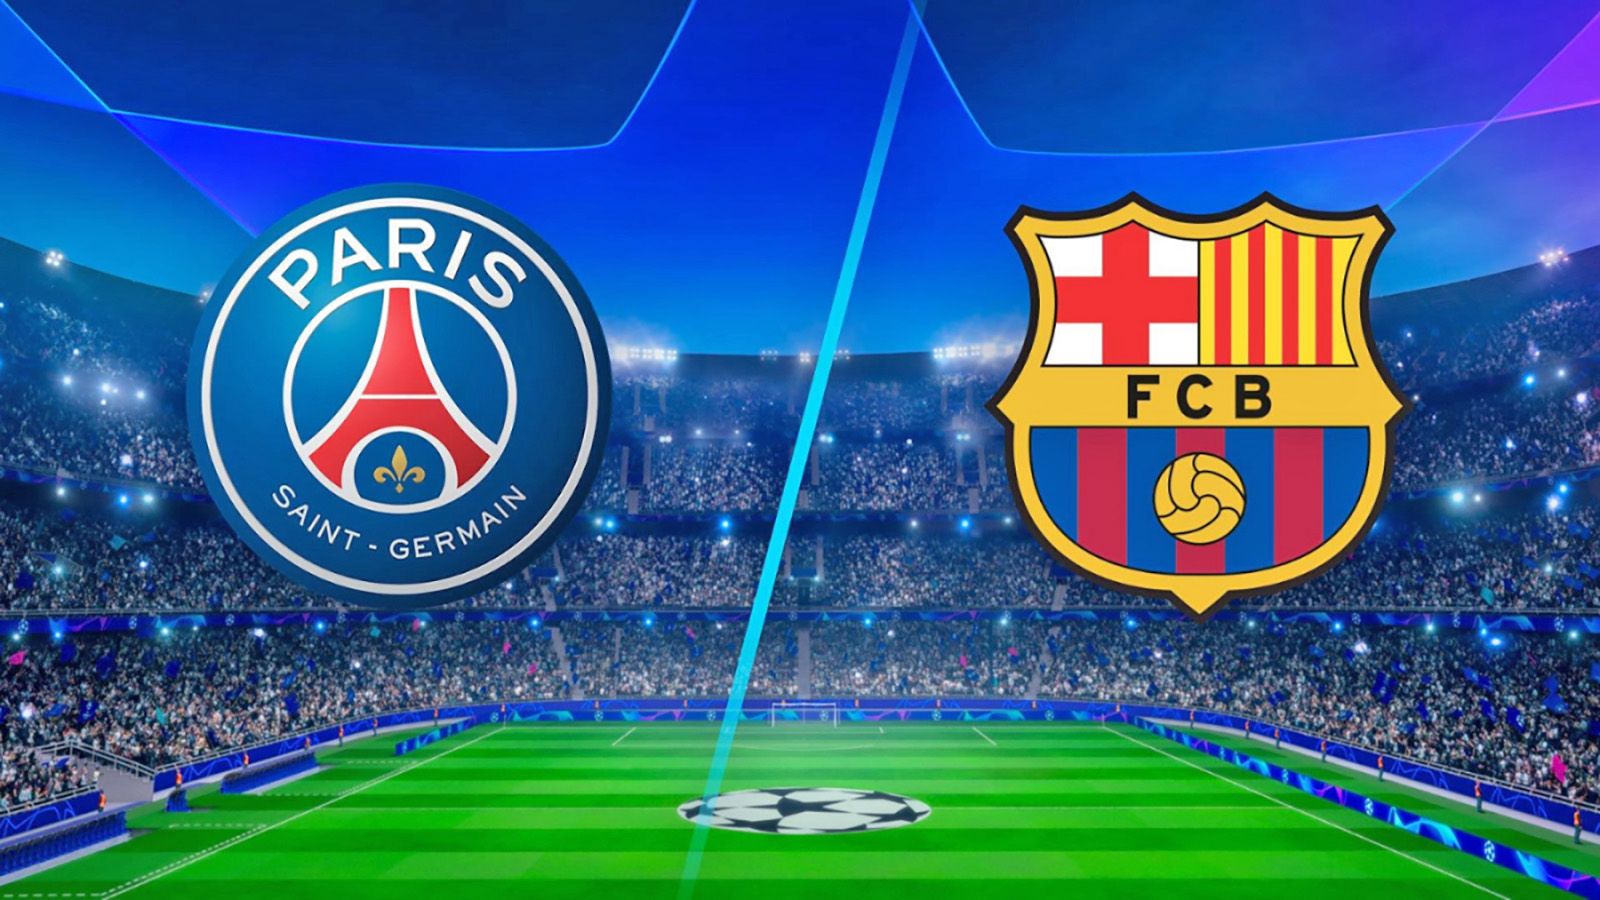 Paris Saint-Germain vs Barcelona – Preview, Team News, Tickets & Prediction